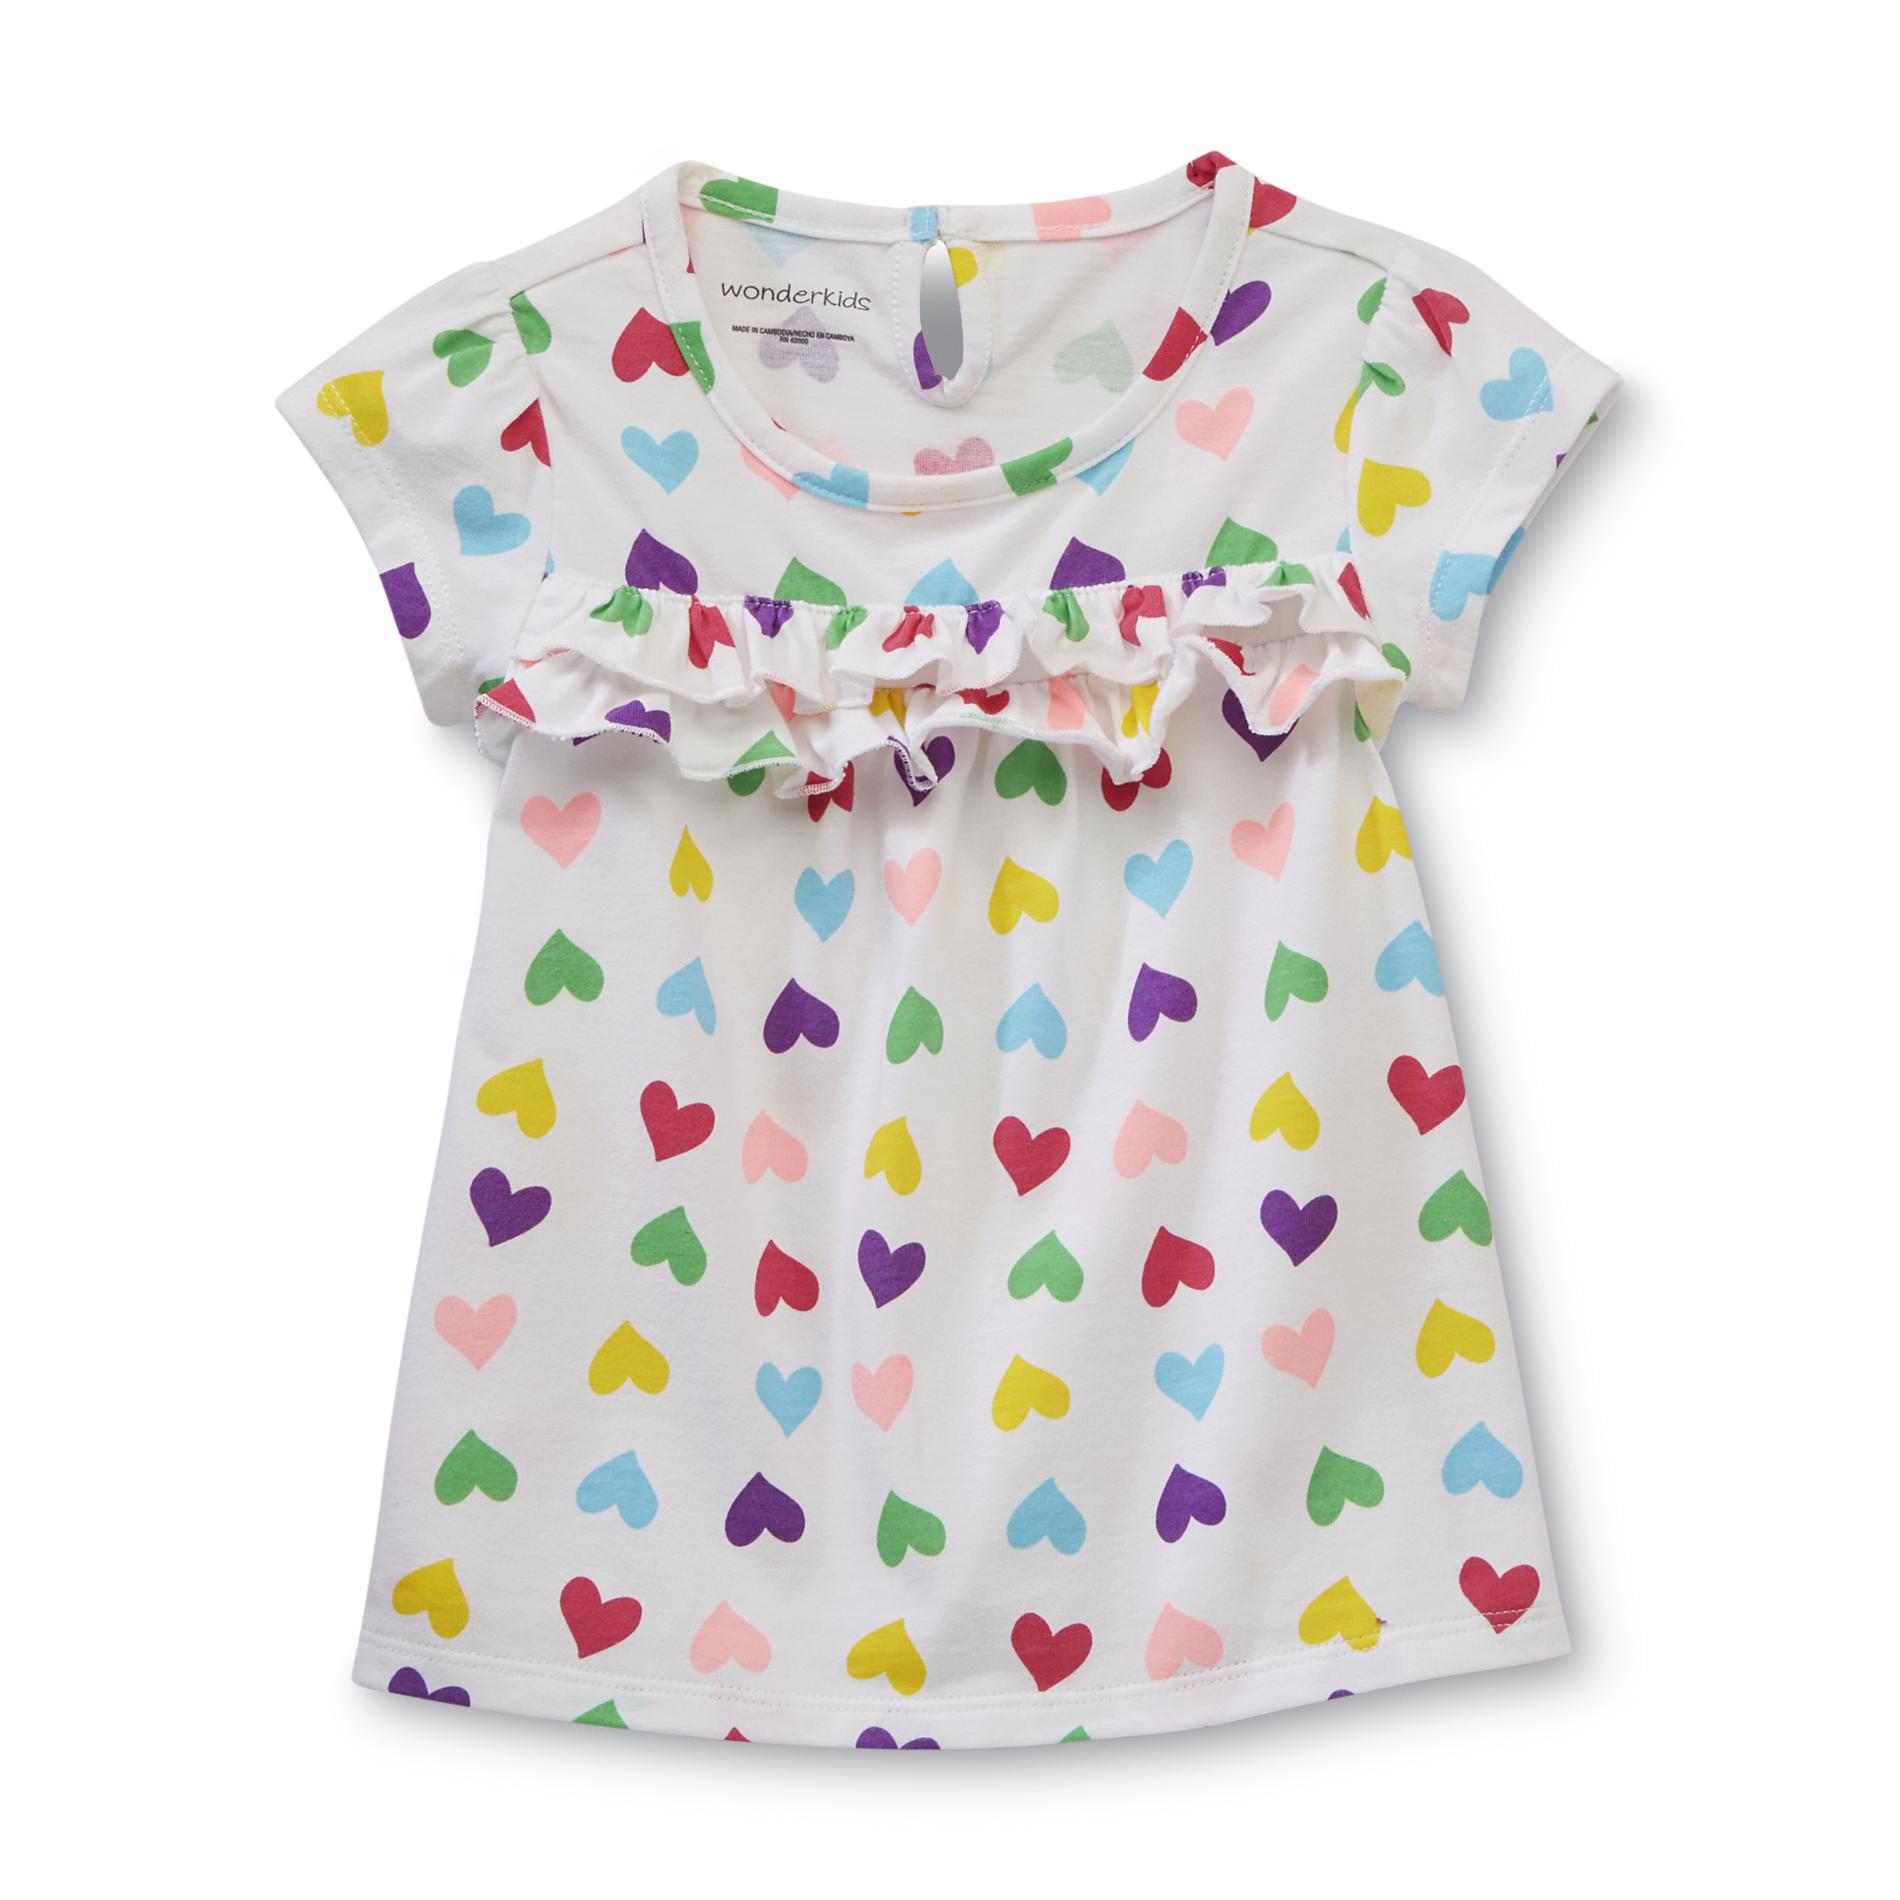 WonderKids Infant & Toddler Girl's Ruffle-Trim Tunic Top - Hearts